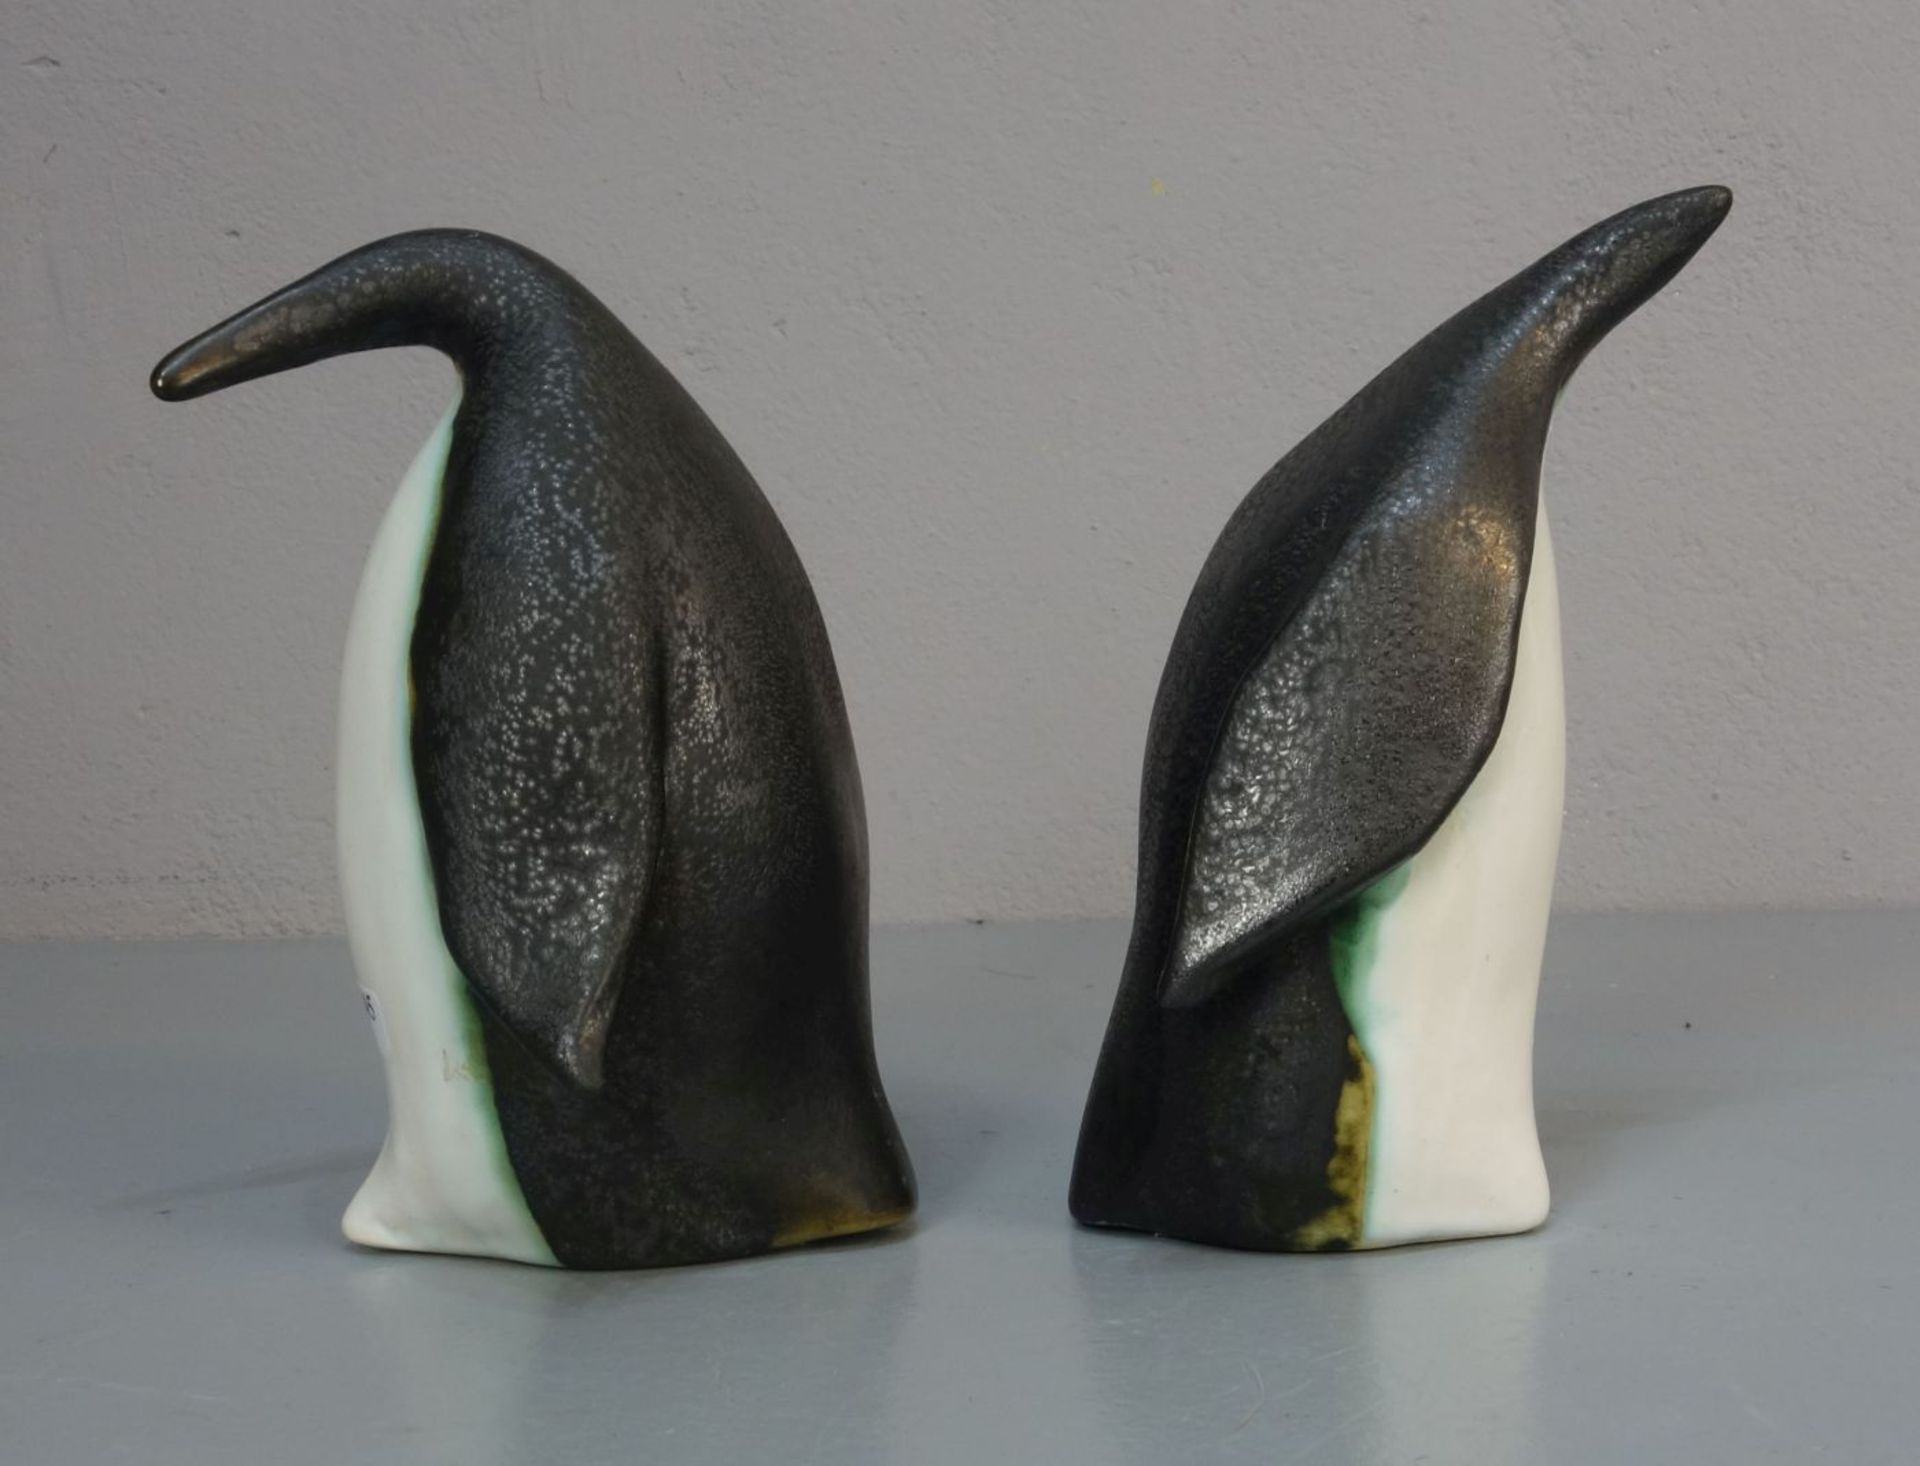 KERAMIKFIGUREN: "Pinguine" / ceramic penguins, Studiokeramik, heller Scherben, weiß, schwarz und - Bild 3 aus 5